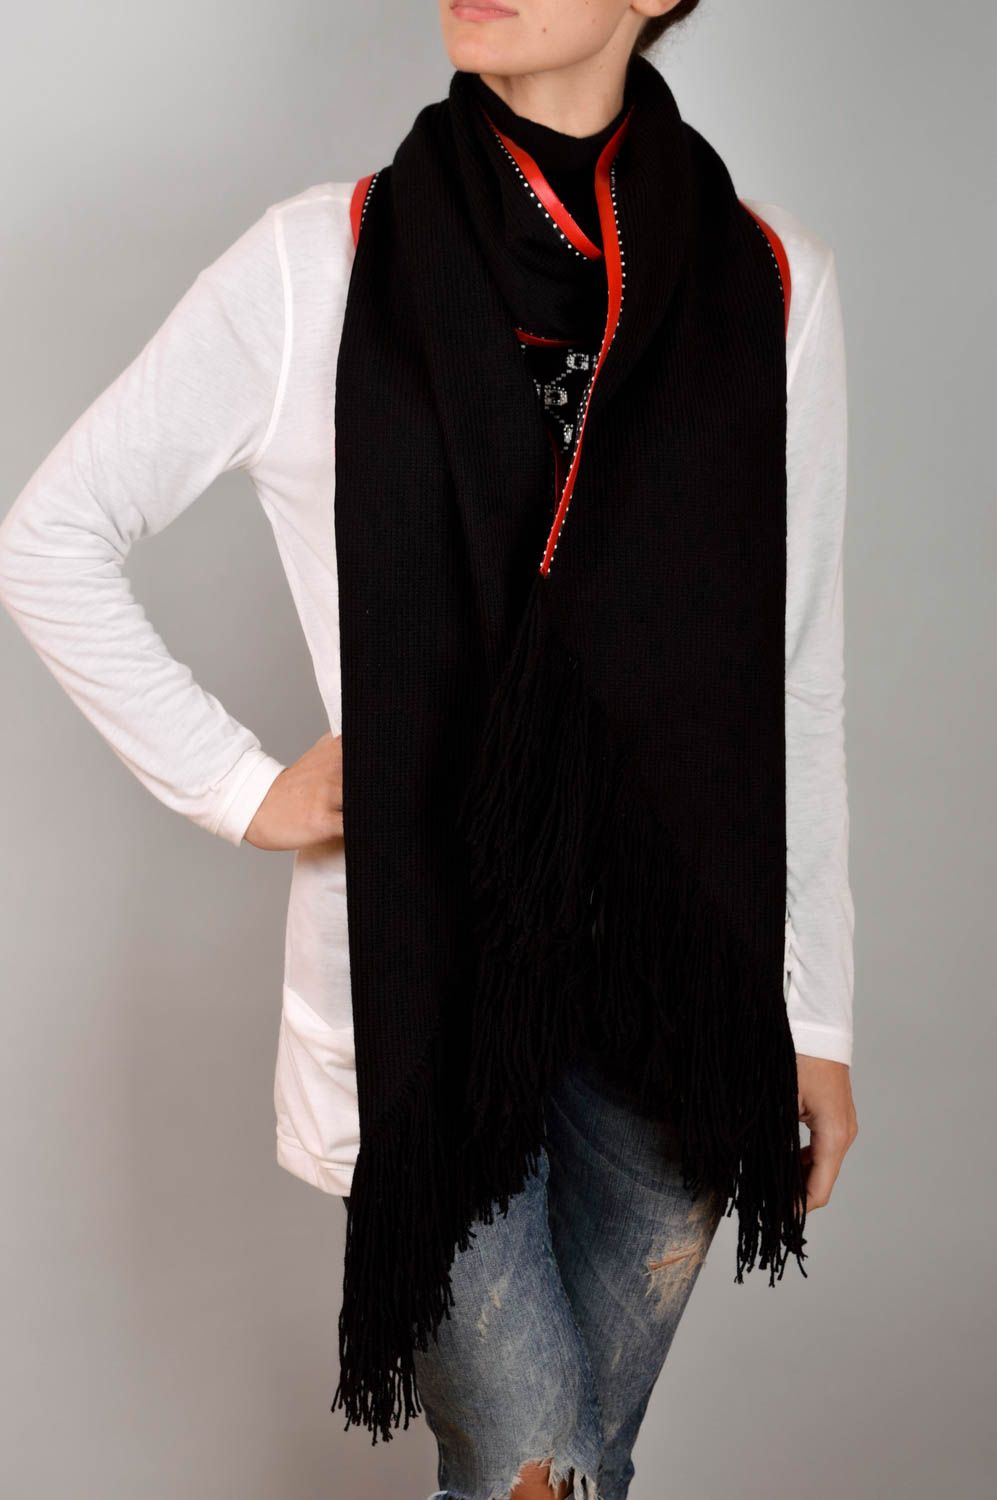 Damen Schal handgefertigt Winter Accessoires Damen Frauen Geschenk schwarz rot foto 5